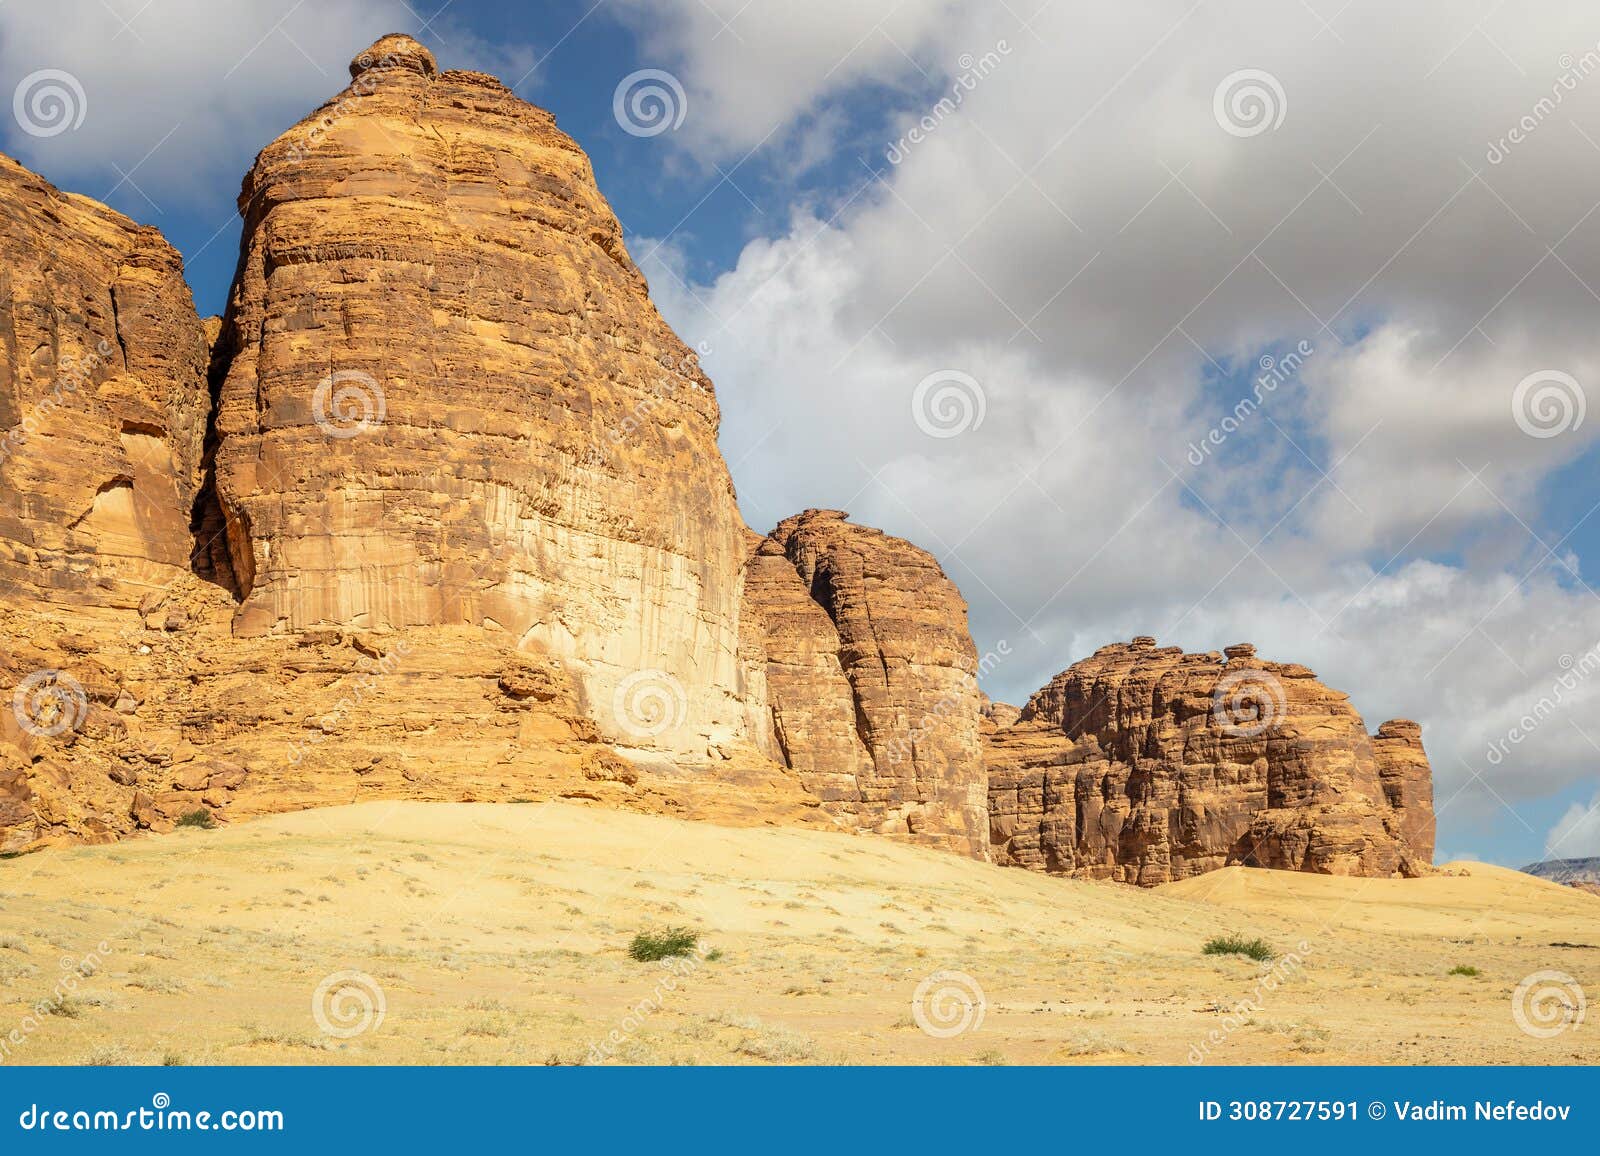 desert erosion formations near jabal ikmah, al ula, saudi arabia